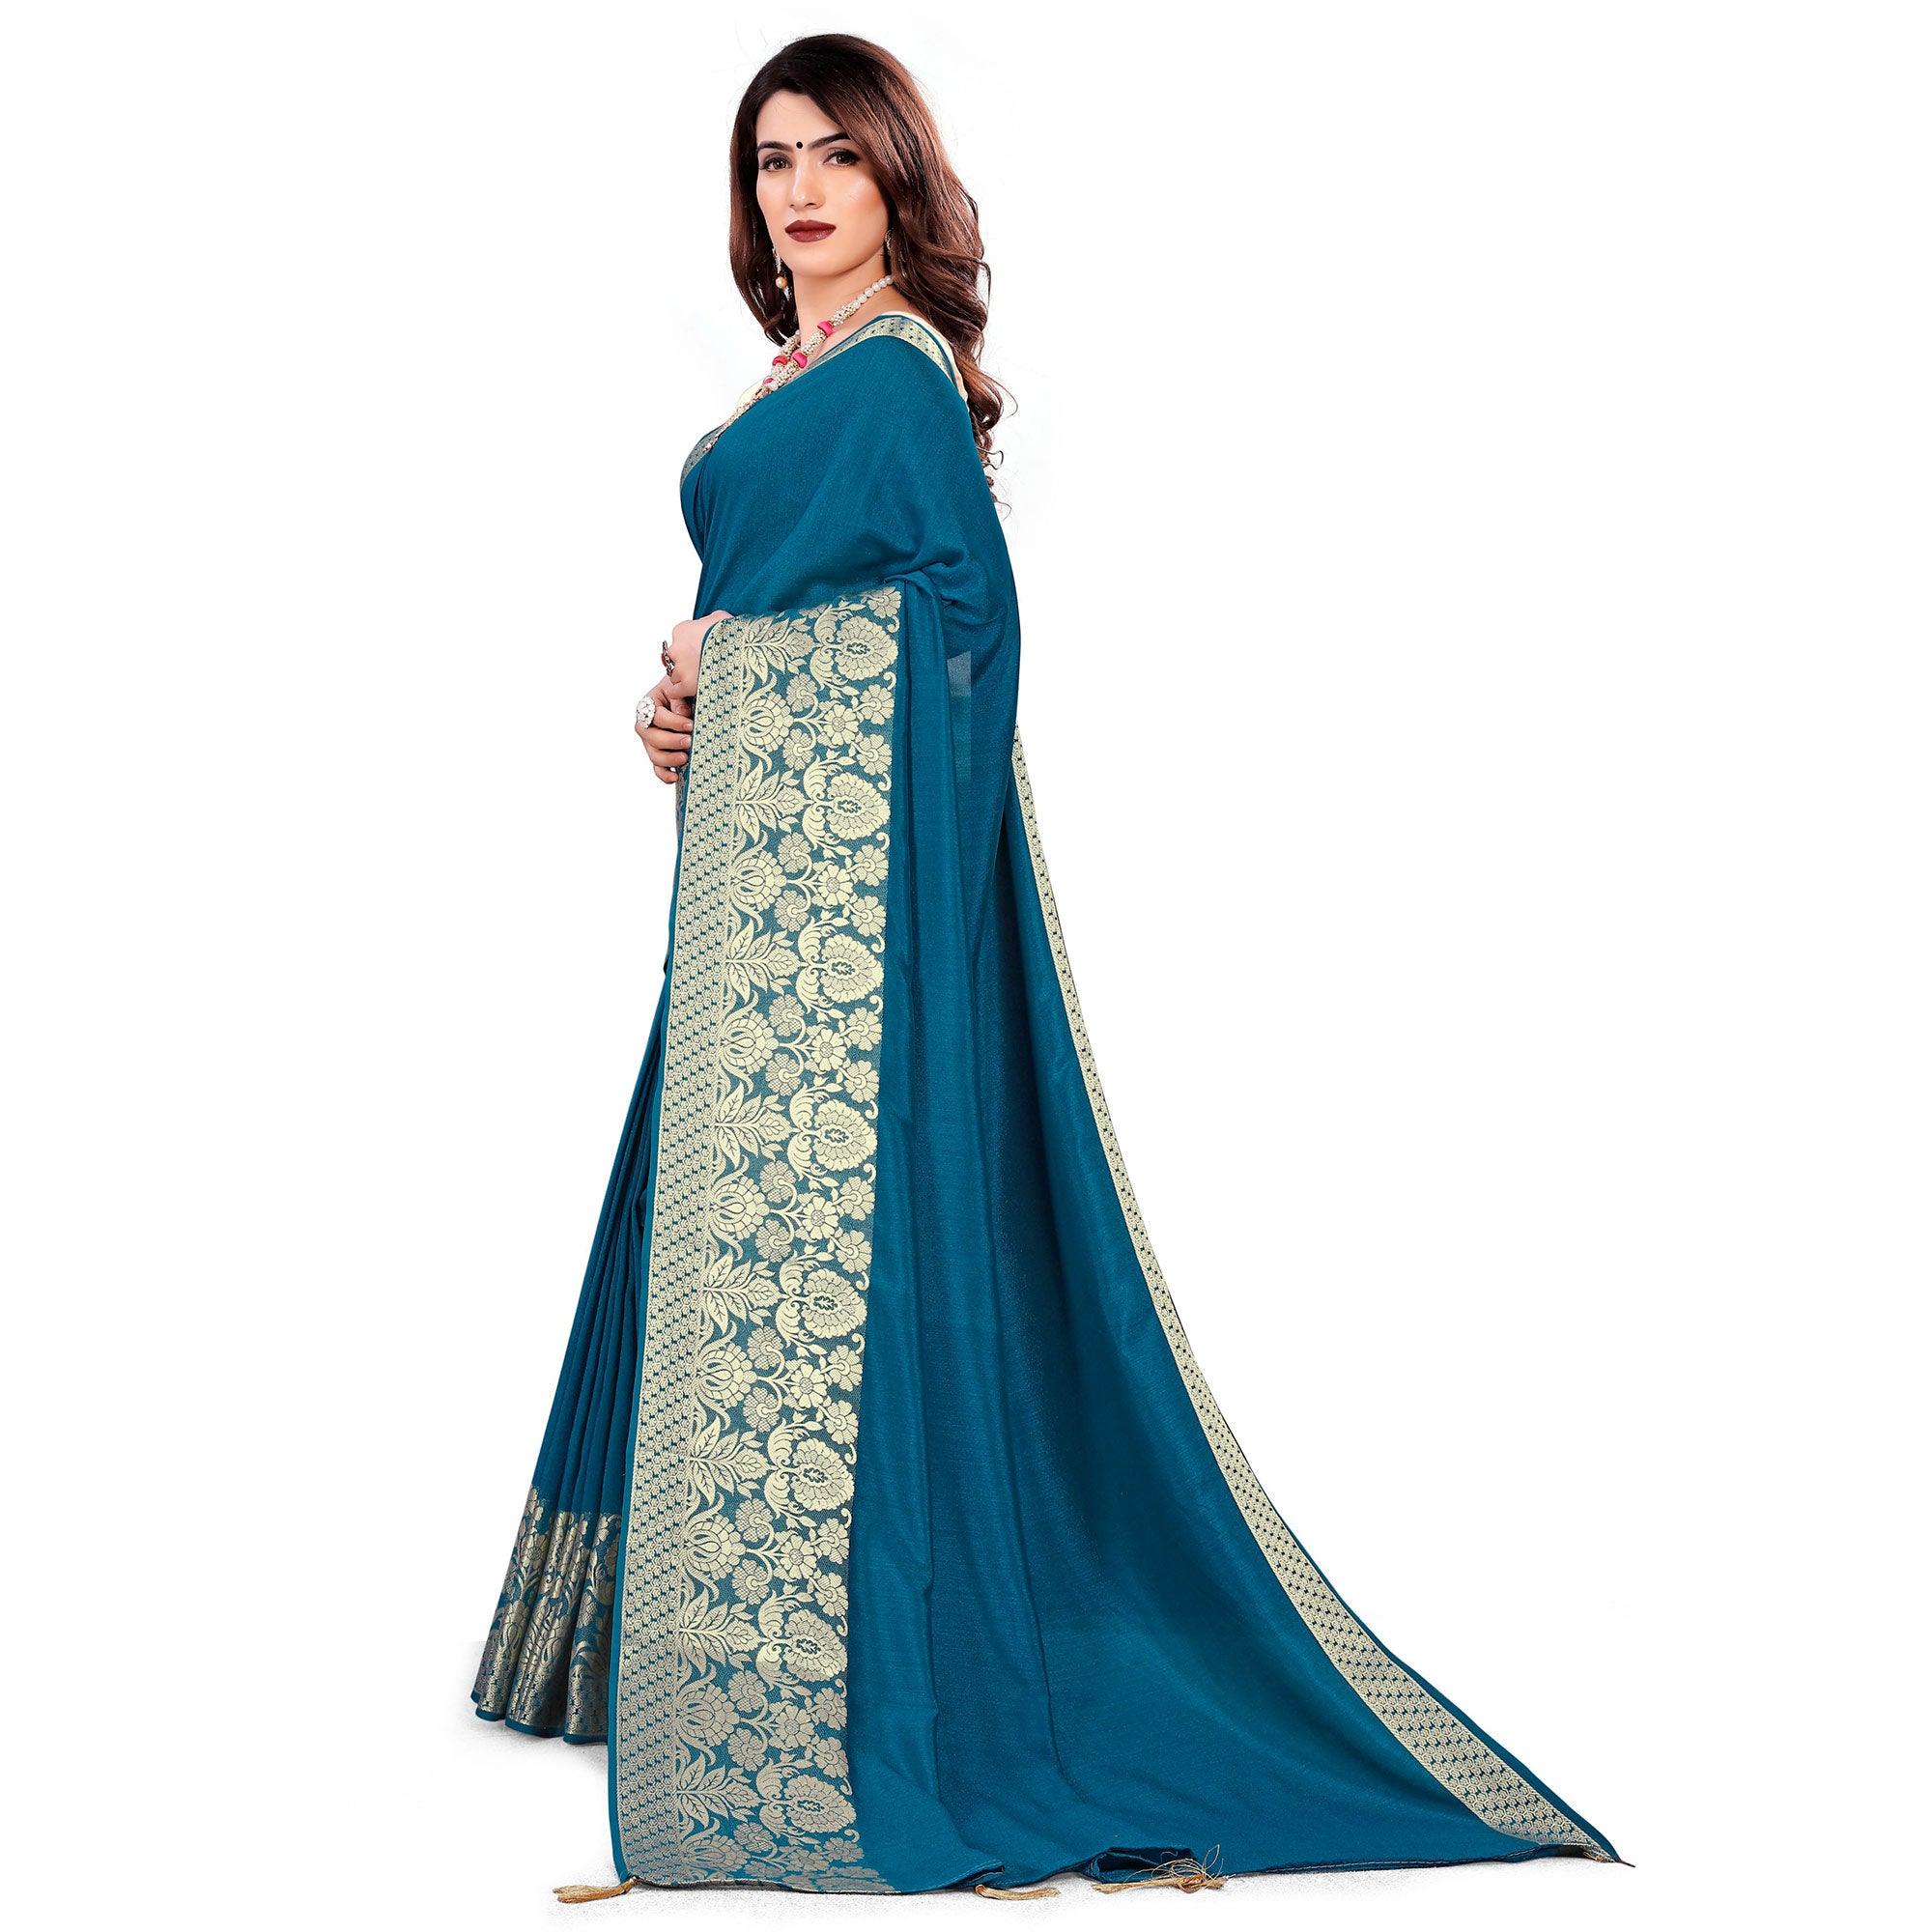 Classy Teal Blue Colored Festive Wear Woven Art Silk Saree With Tassels - Peachmode